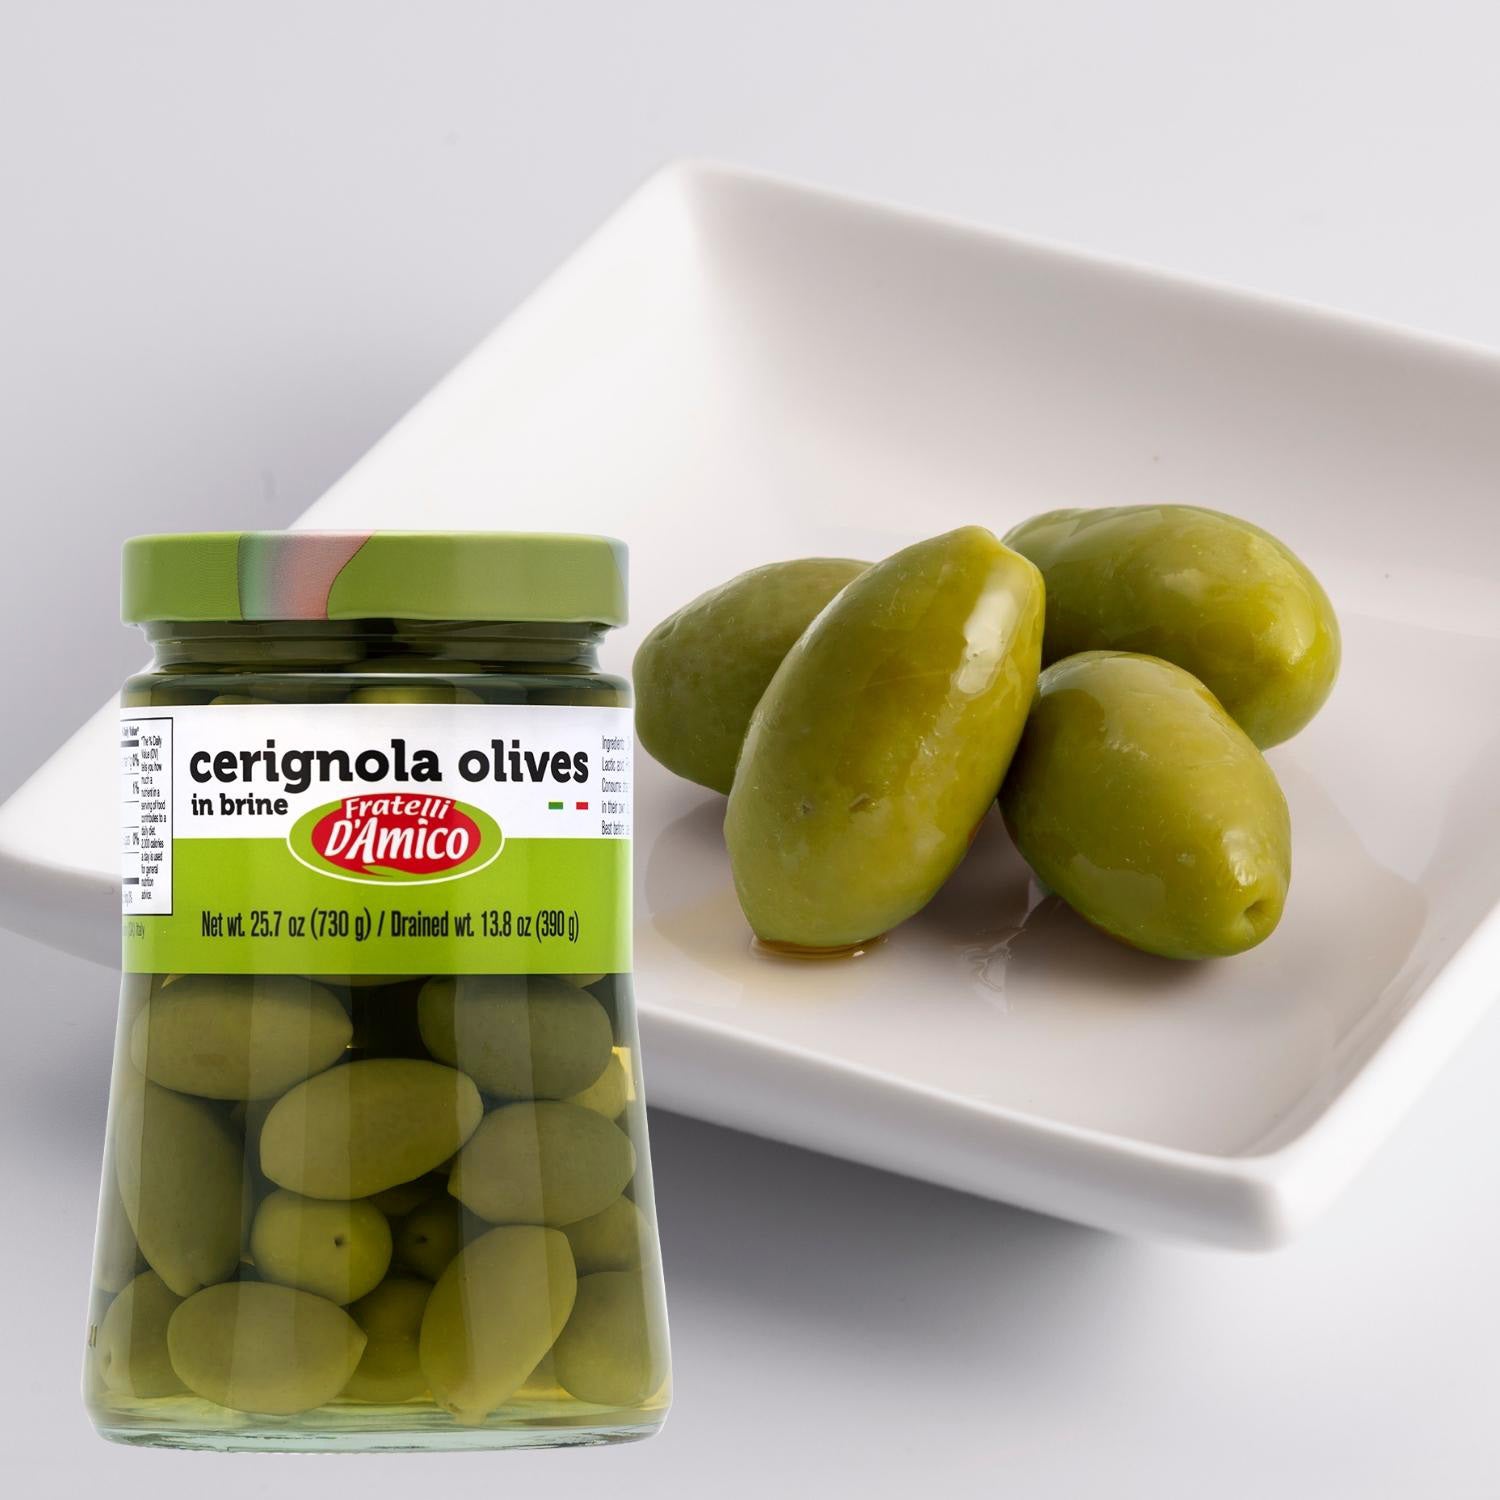 Fratelli D'Amico Green Olives, Cerignola Olives In Brine. Net Weight 25.7 oz (730) g.